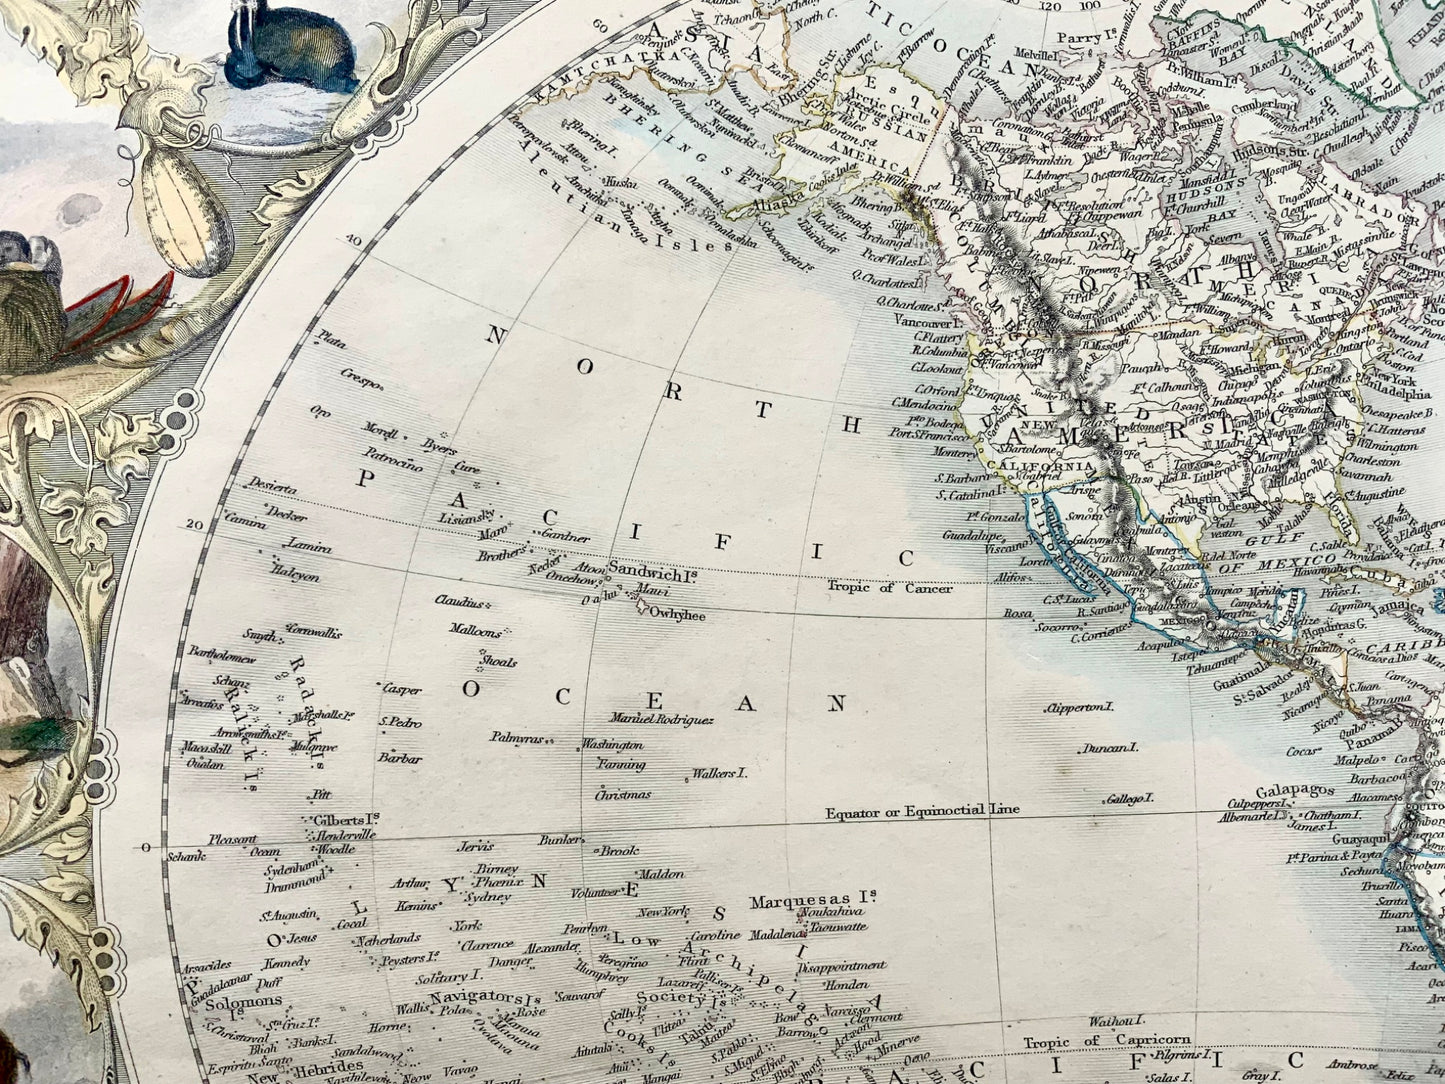 1851 America, emisfero occidentale, Tallis, mappa opaca colorata a mano